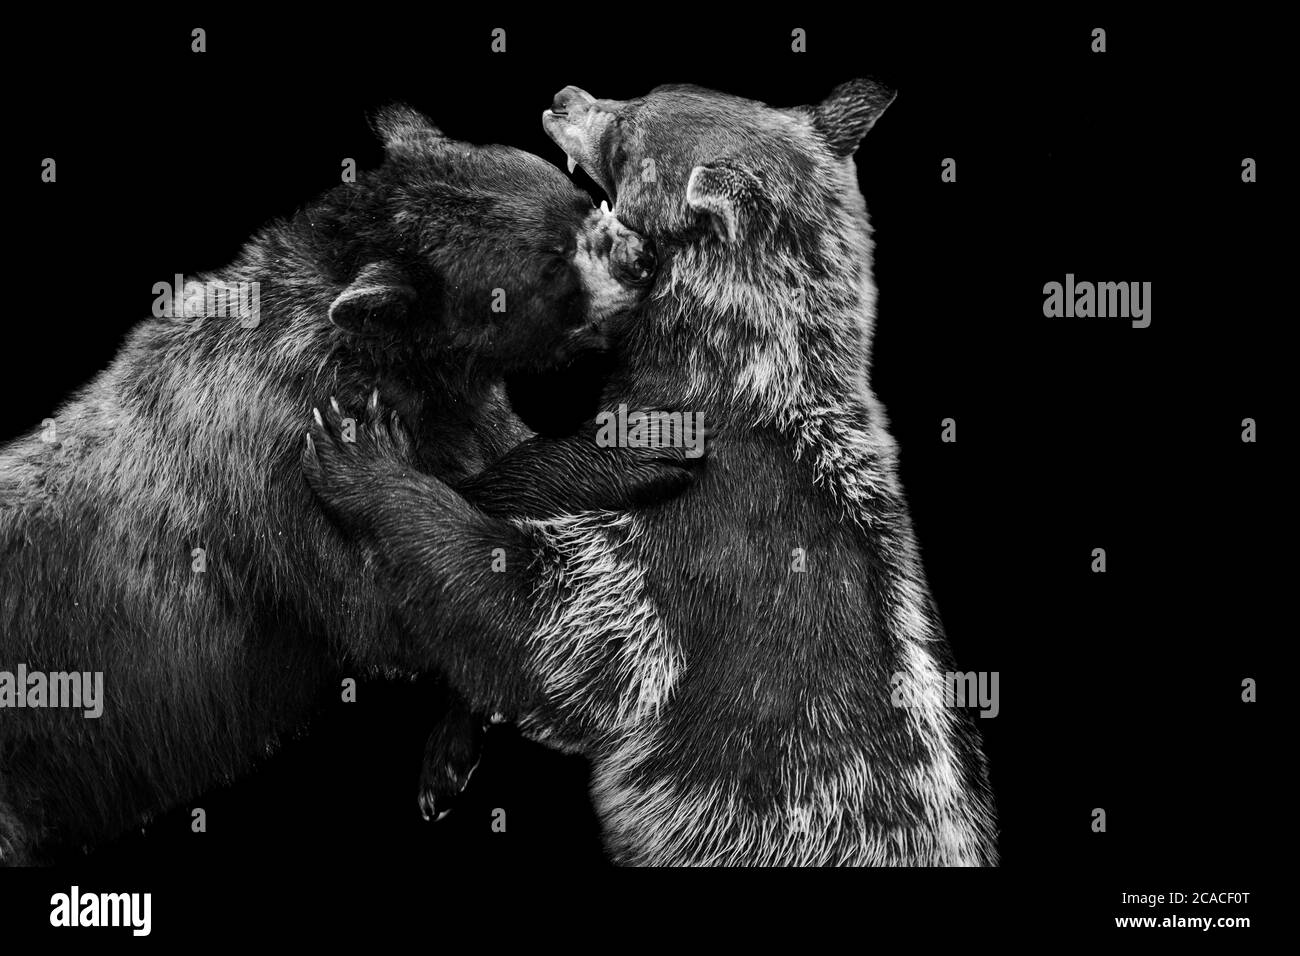 Black bear Black and White Stock Photos & Images - Alamy